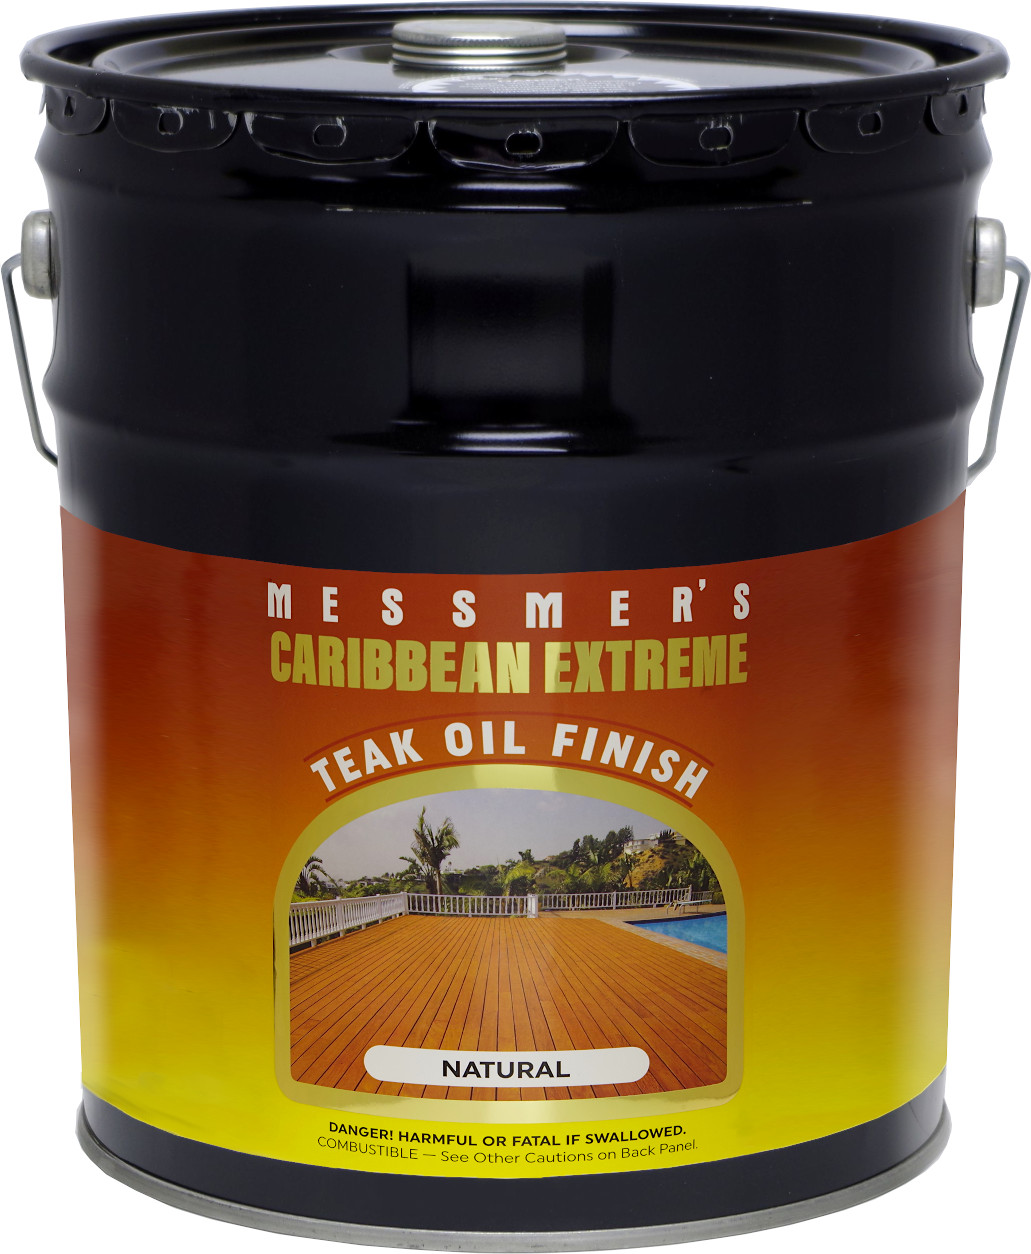 Messmer's Caribbean Extreme Teak Oil Finish - 5 Gallon